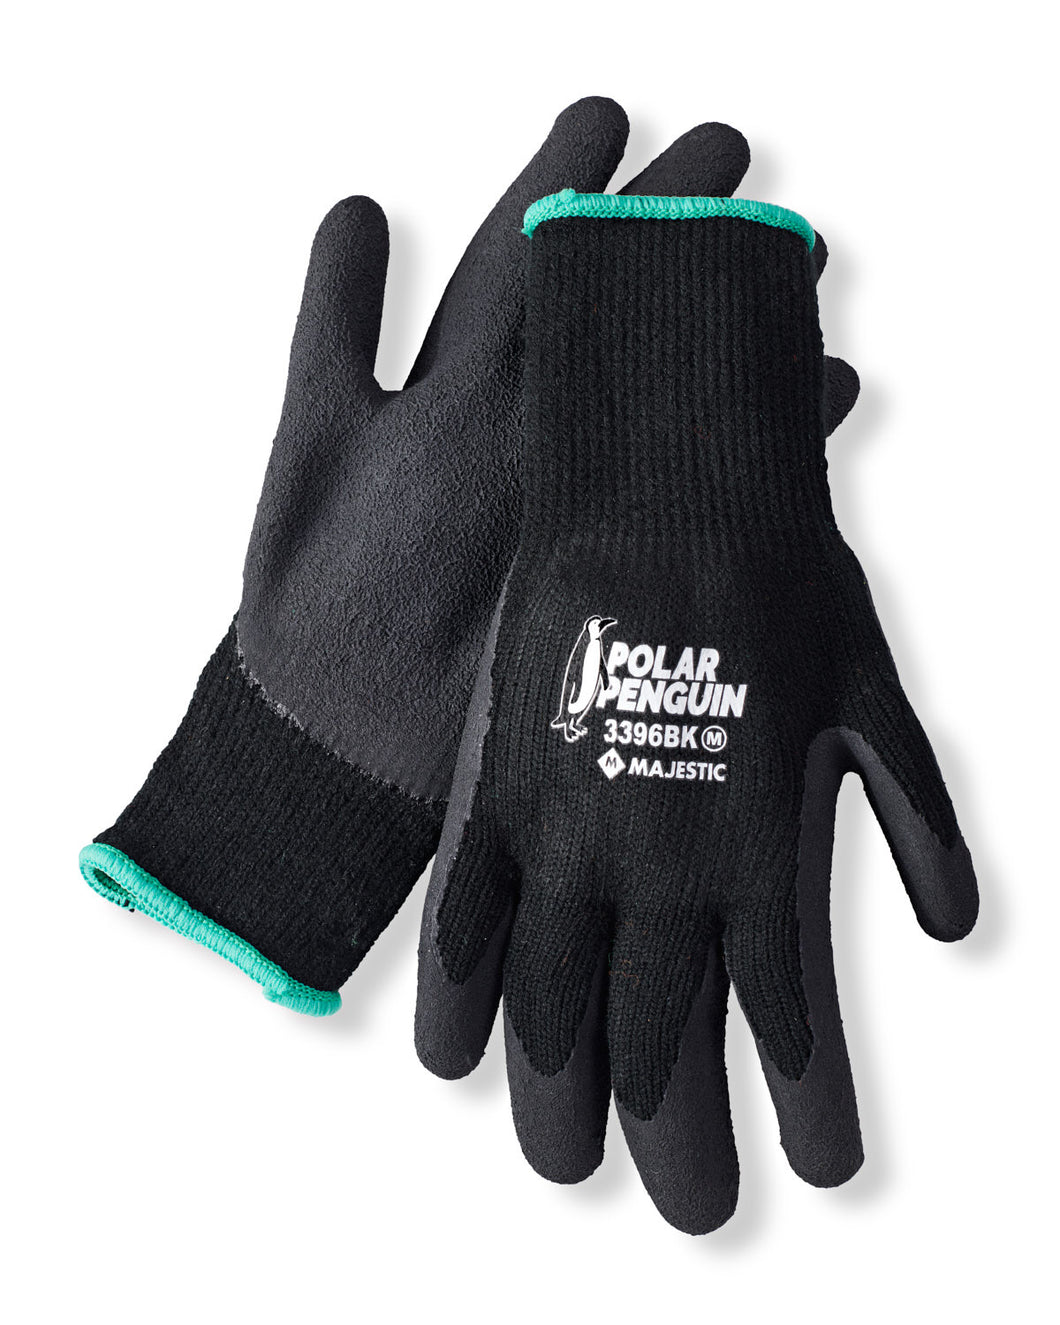 Polar Penguin Thermal Grip Work Gloves Black 12 Pair Pack